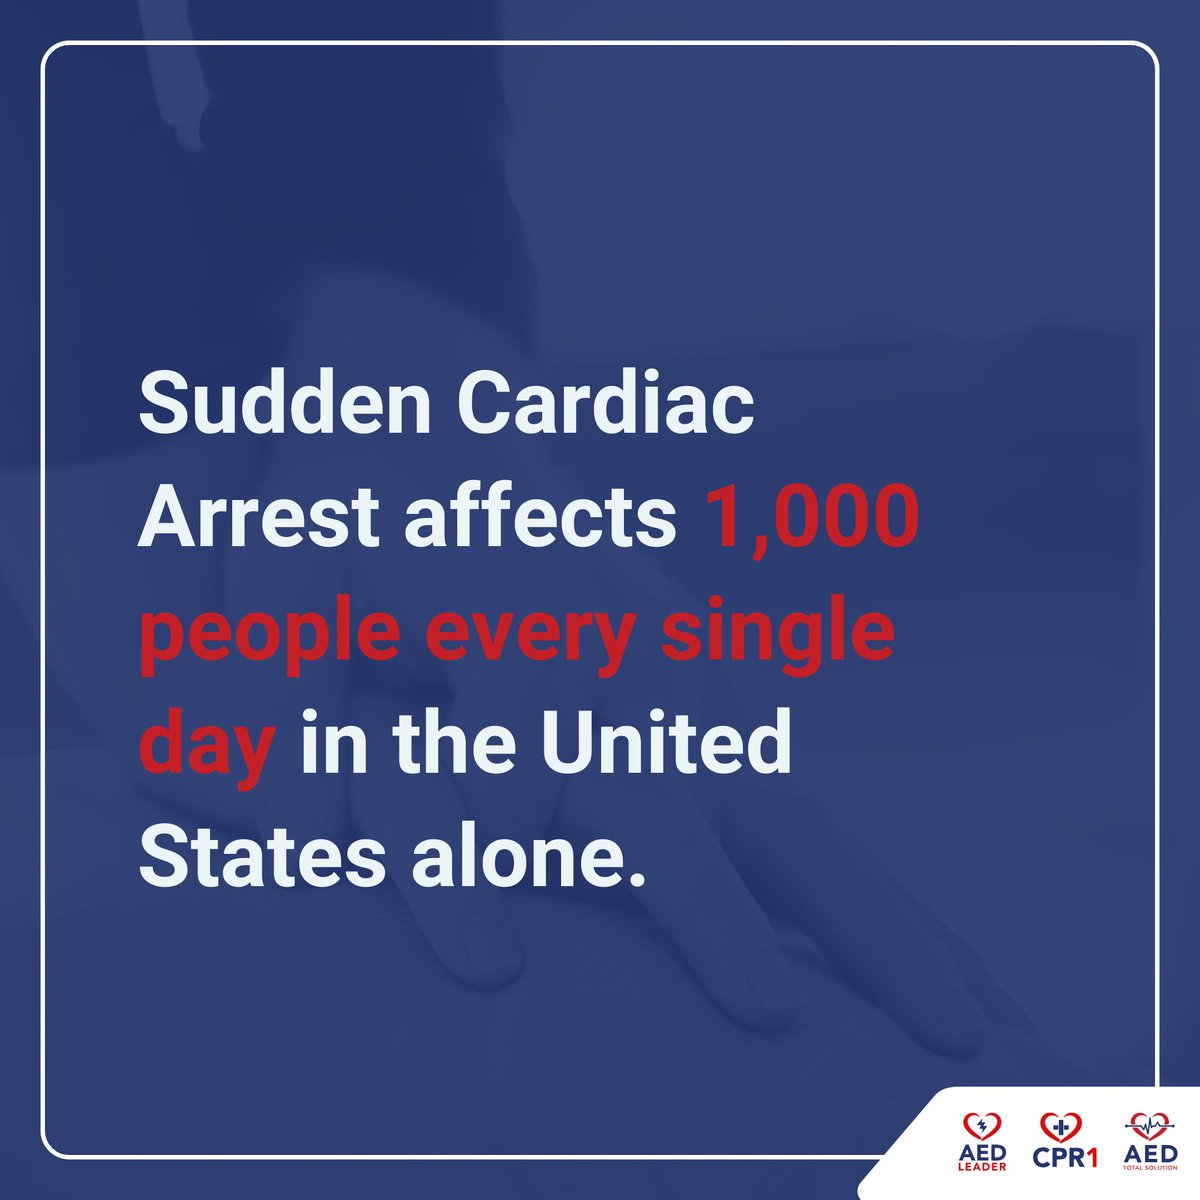 zurl.co/C5Hv
#SuddenCardiacArrest #CPRsavesLives #HeartHealth #AEDAwareness #CardiacArrest